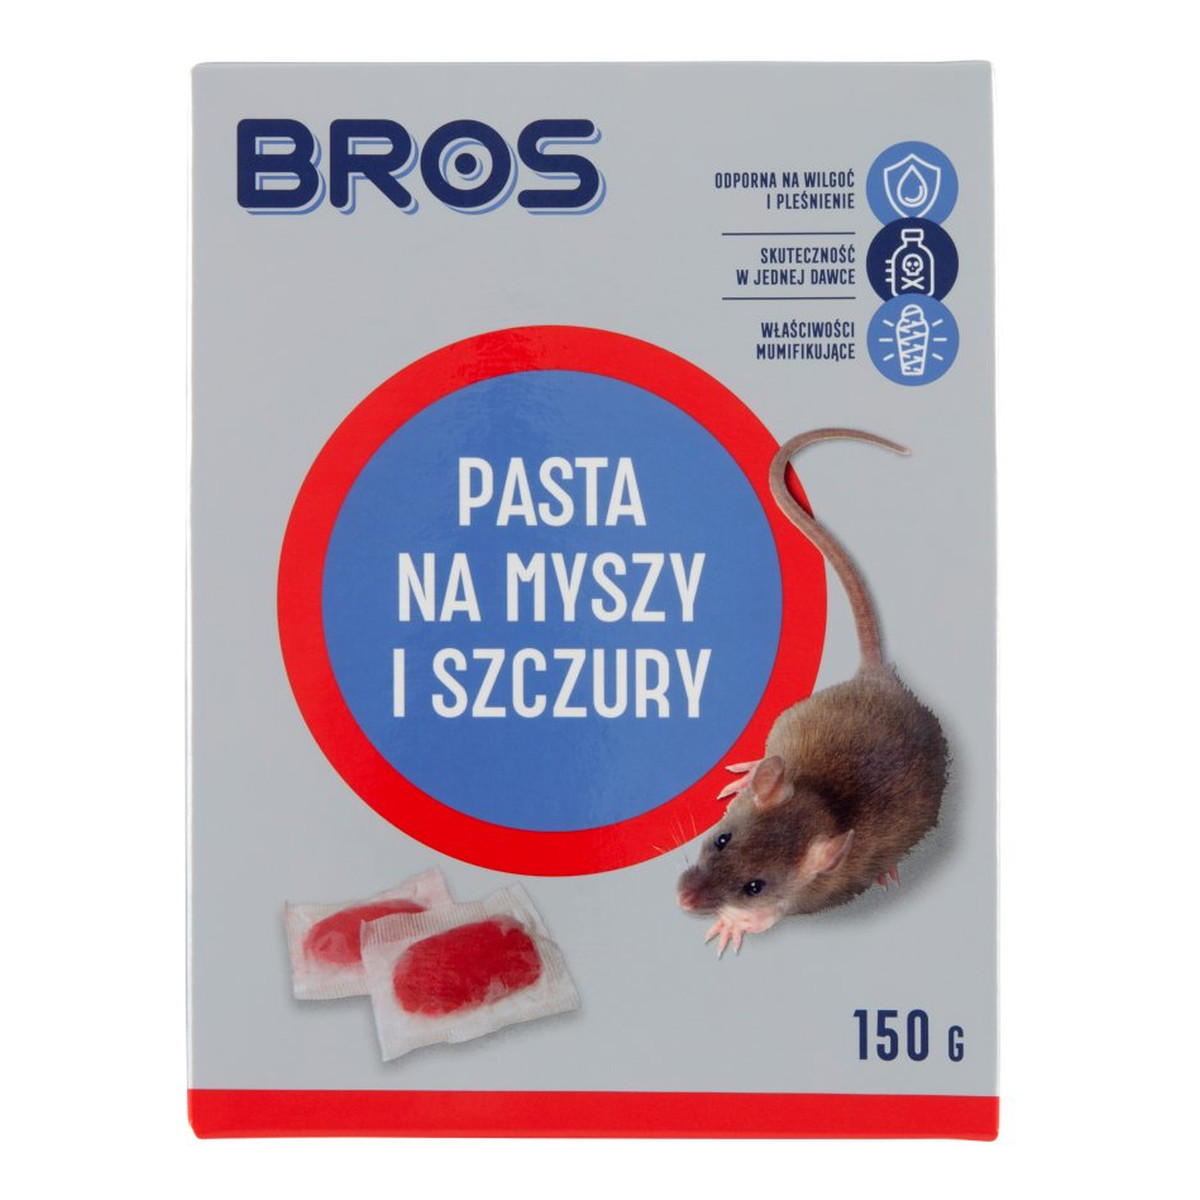 Bros Pasta na myszy i szczury 150g